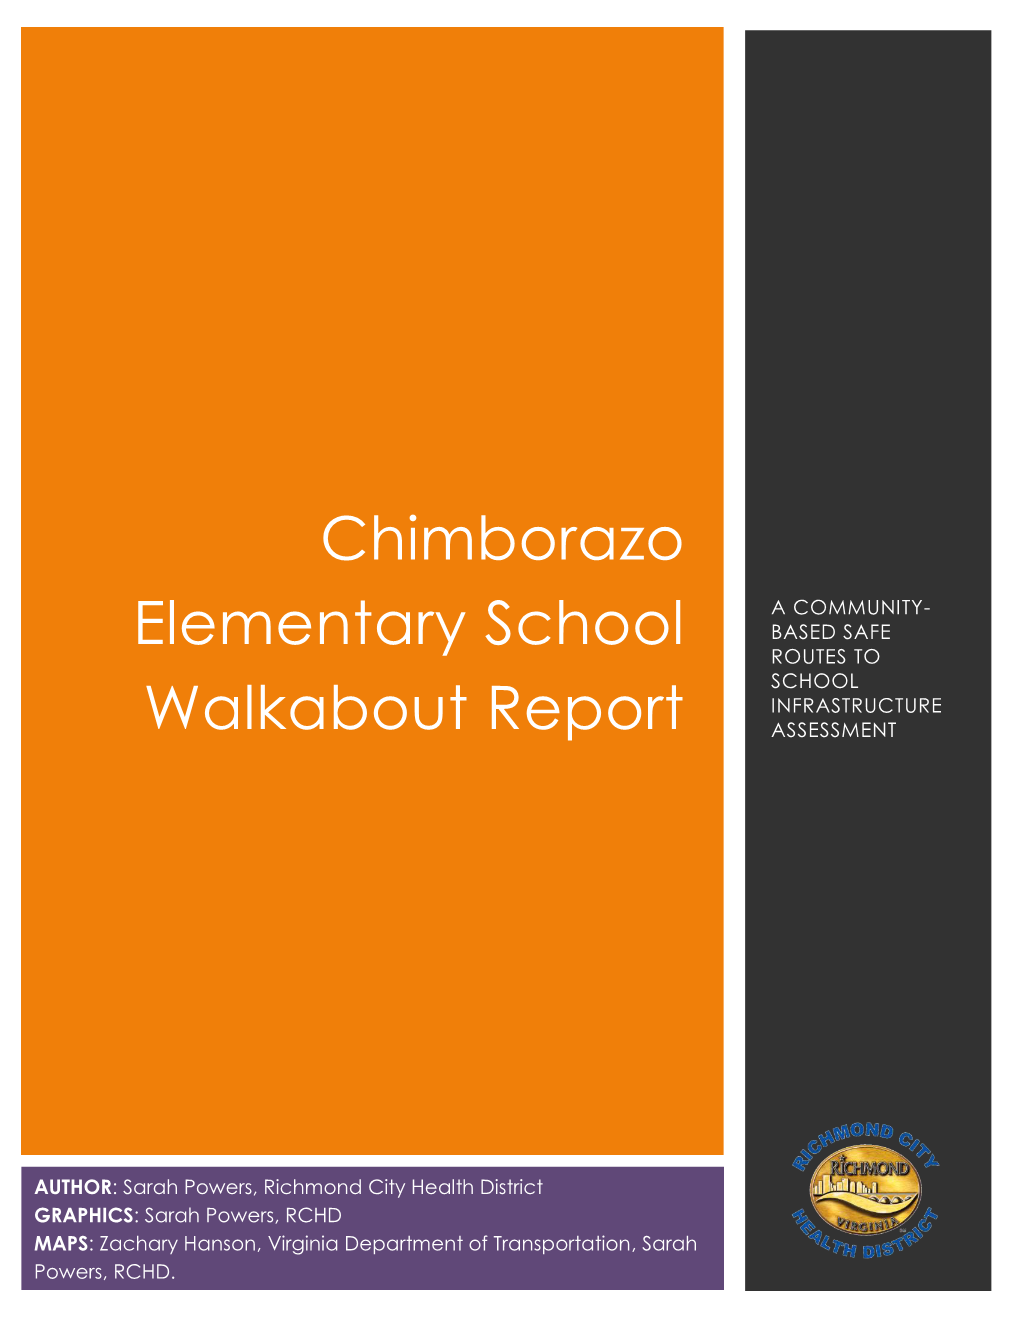 Chimborazo Elementary School Walkabout Report